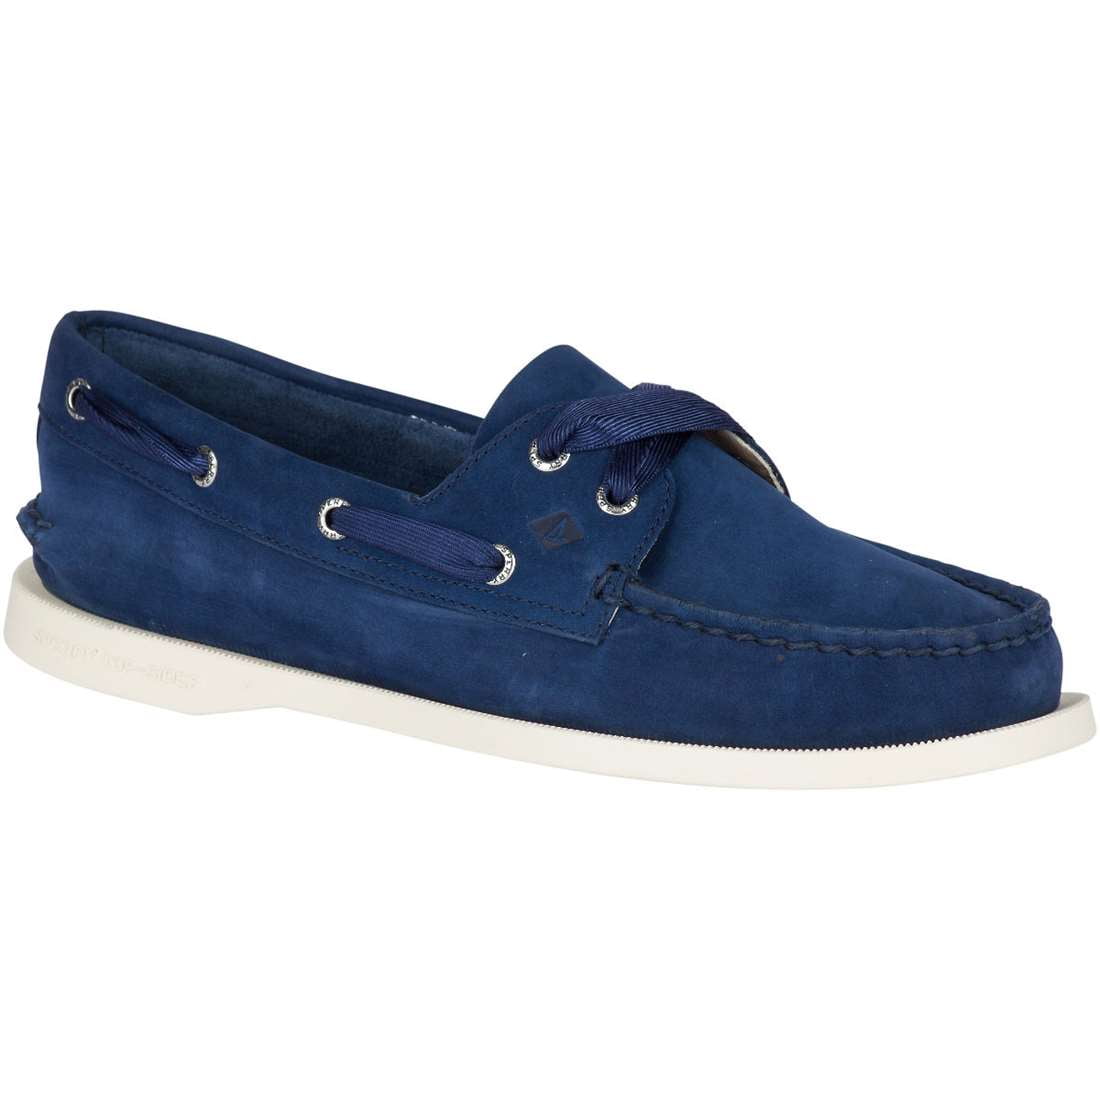 NEW Ladies Seafarers Leather Deck Shoes 2 Colours Blue Beige Flat Size 4-8 